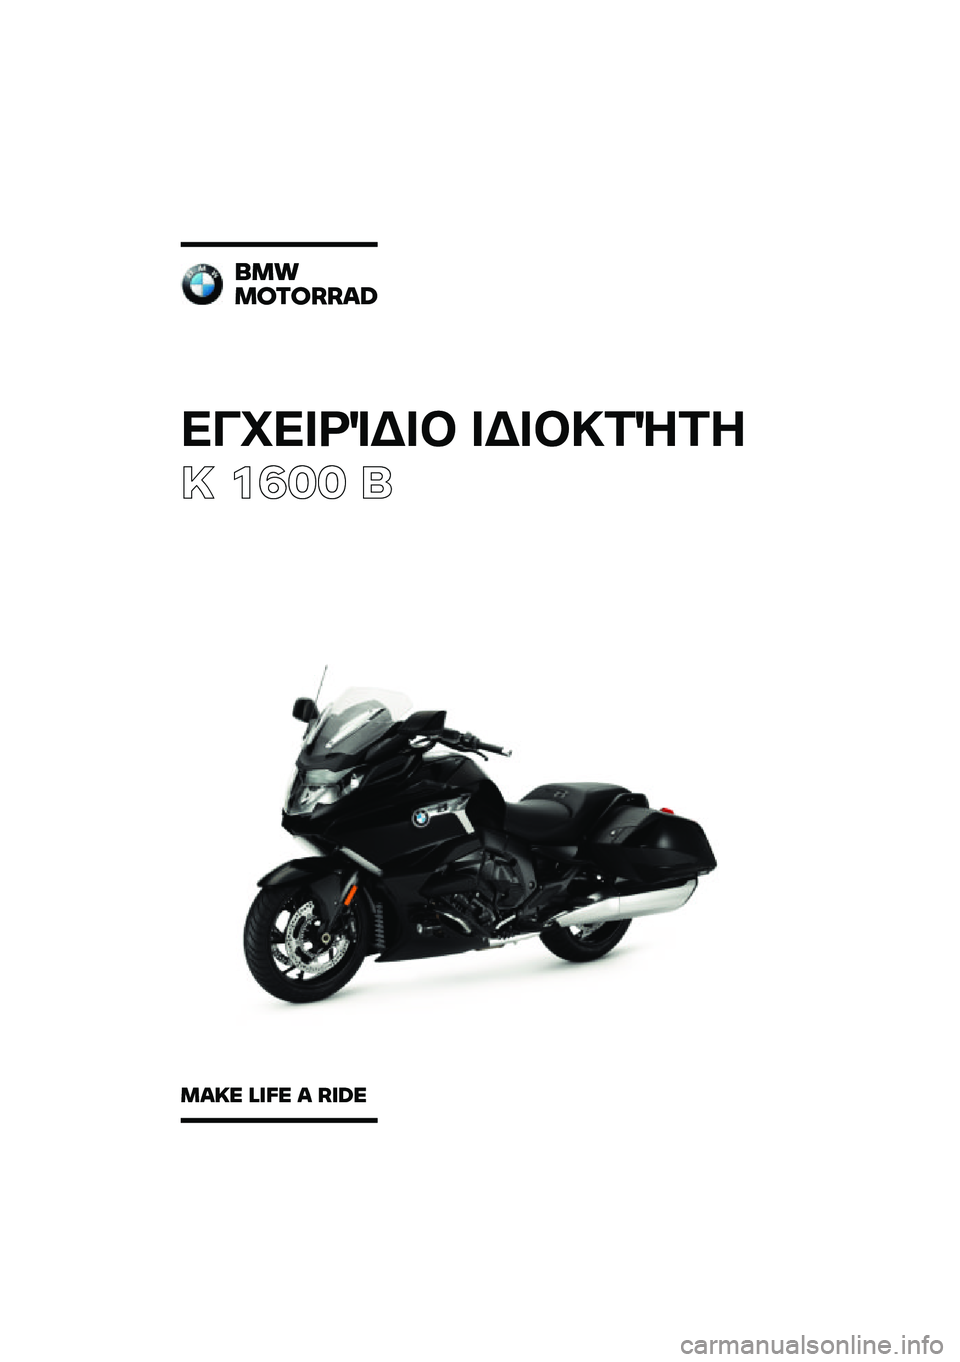 BMW MOTORRAD K 1600 B 2020  Εγχειρίδιο ιδιοκτήτη (in Greek) ��������\b��	 ��\b��	�
��\f��
� ���� �	
���
�������\b�	
��\b�
� �\f�
�� �\b ��
�	� 